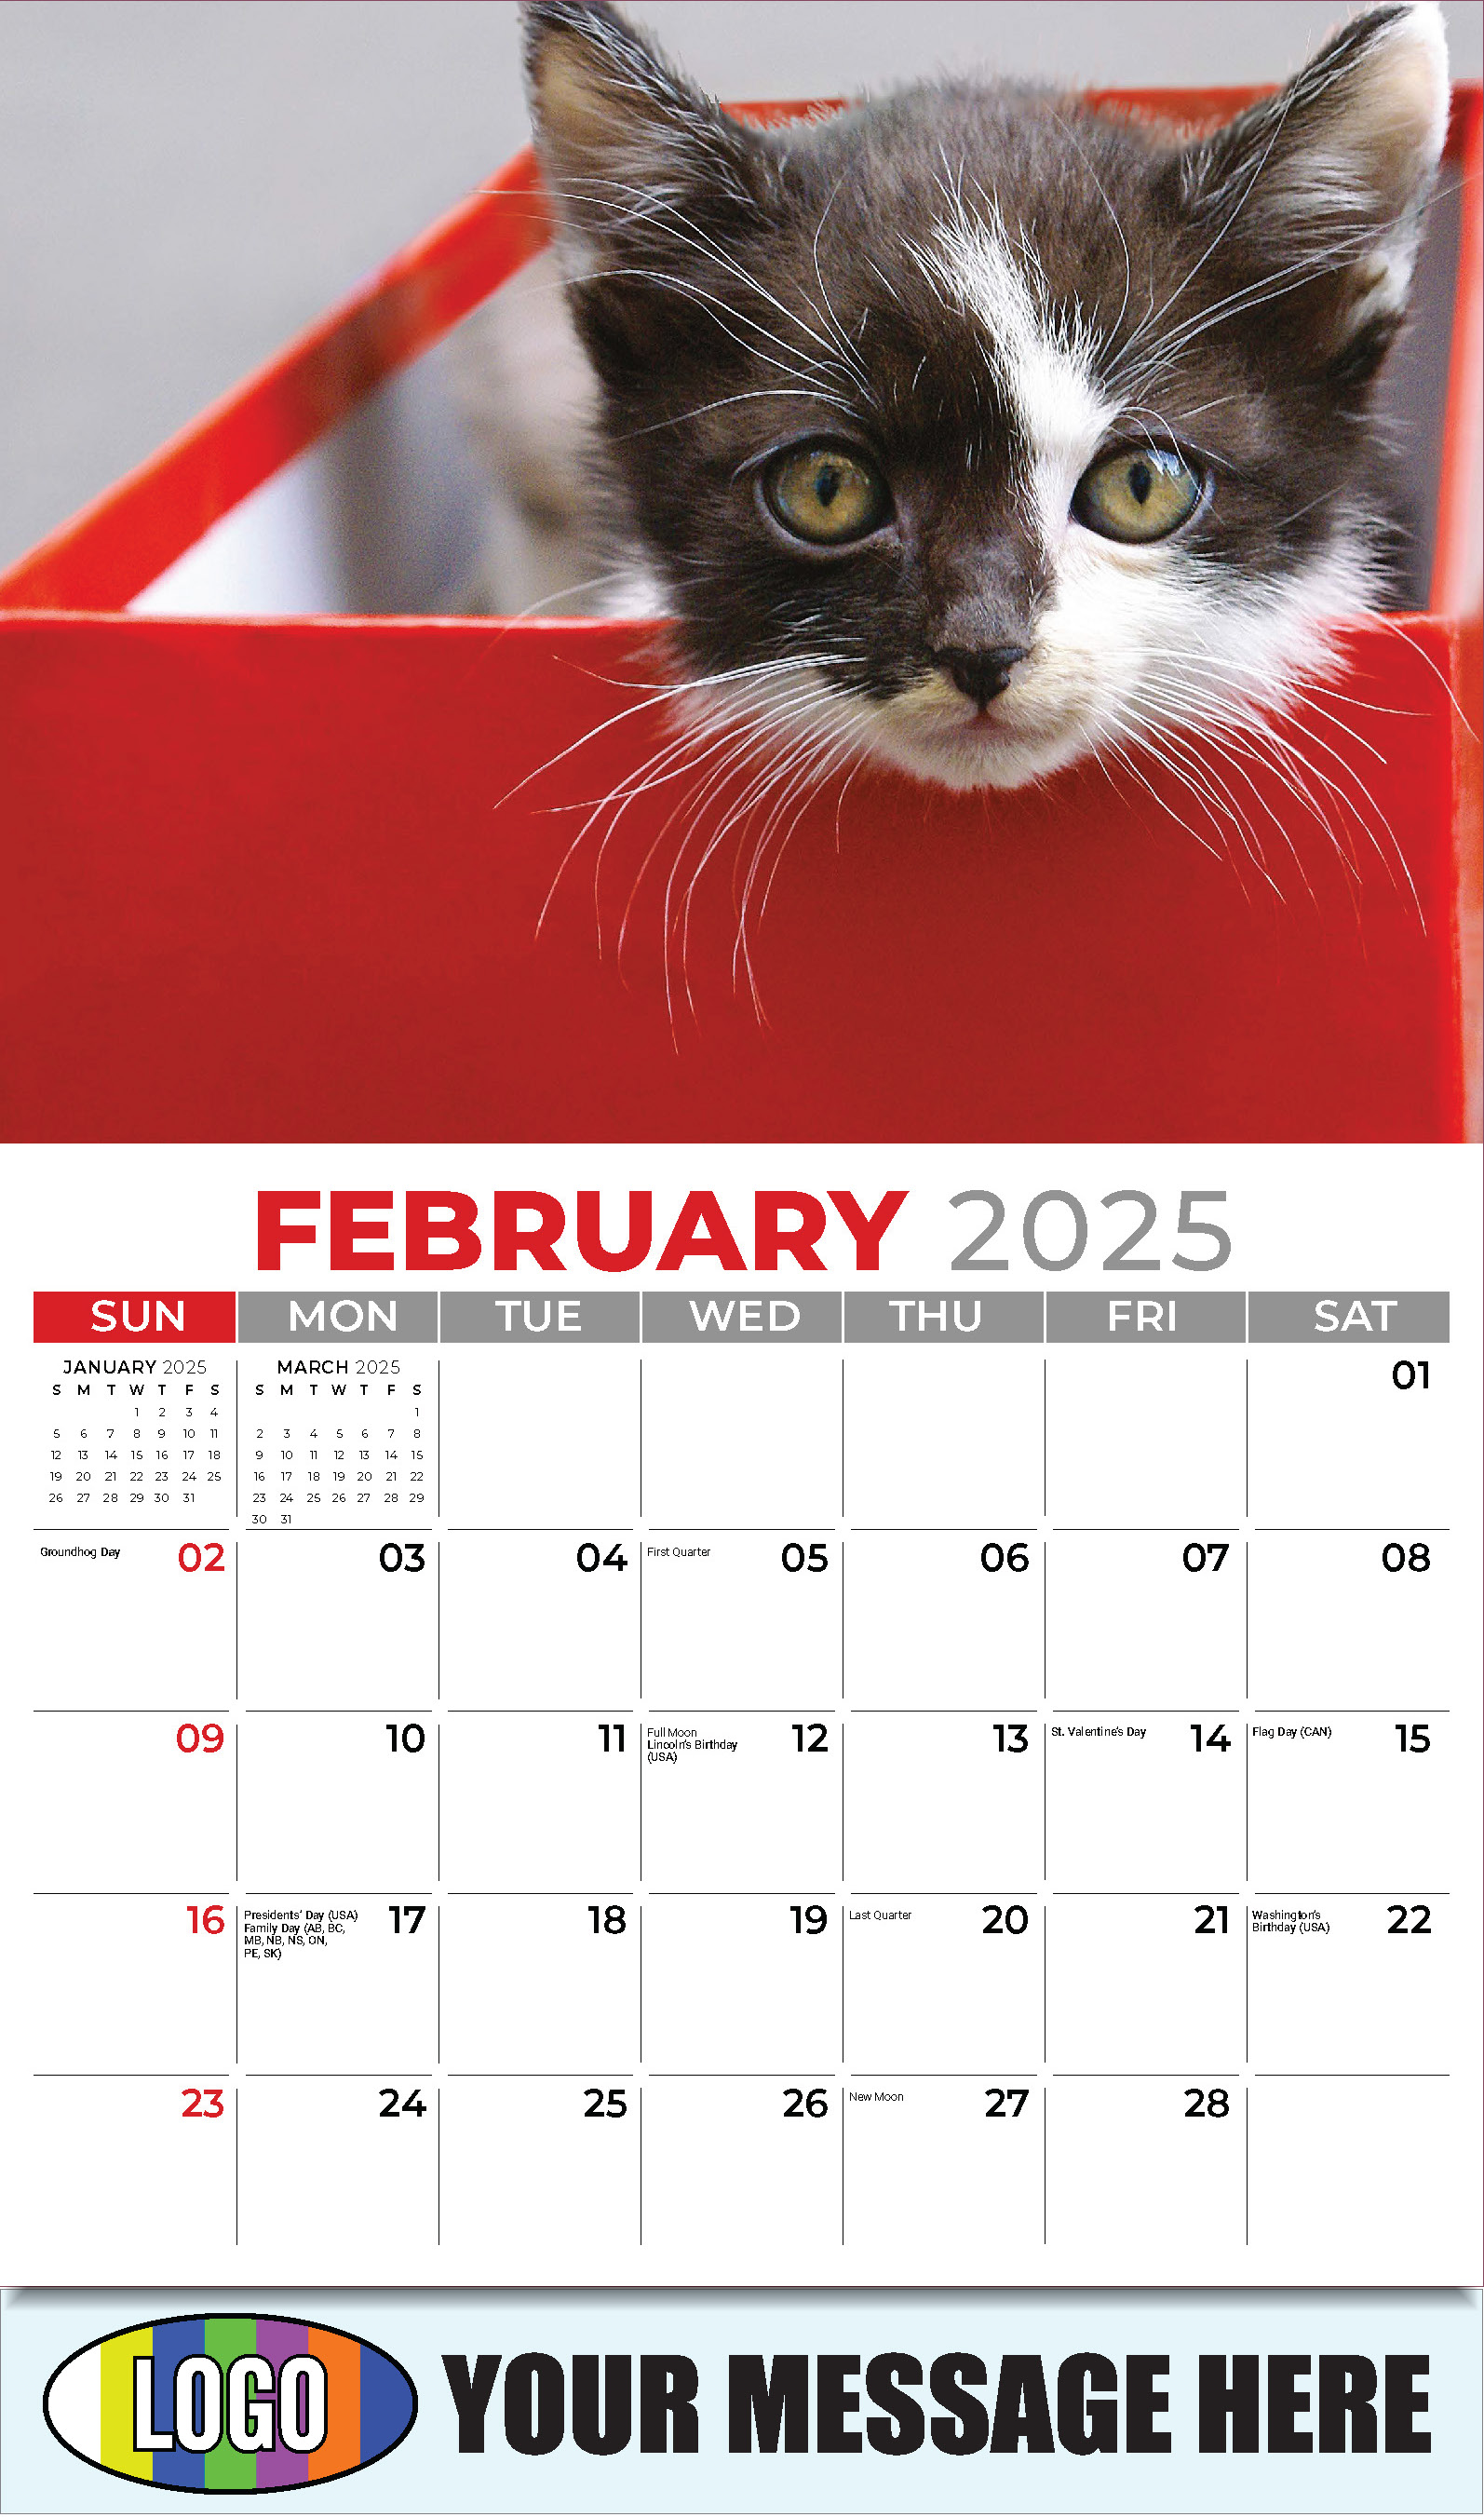 Kittens 2025 Business Promo Wall Calendar - February